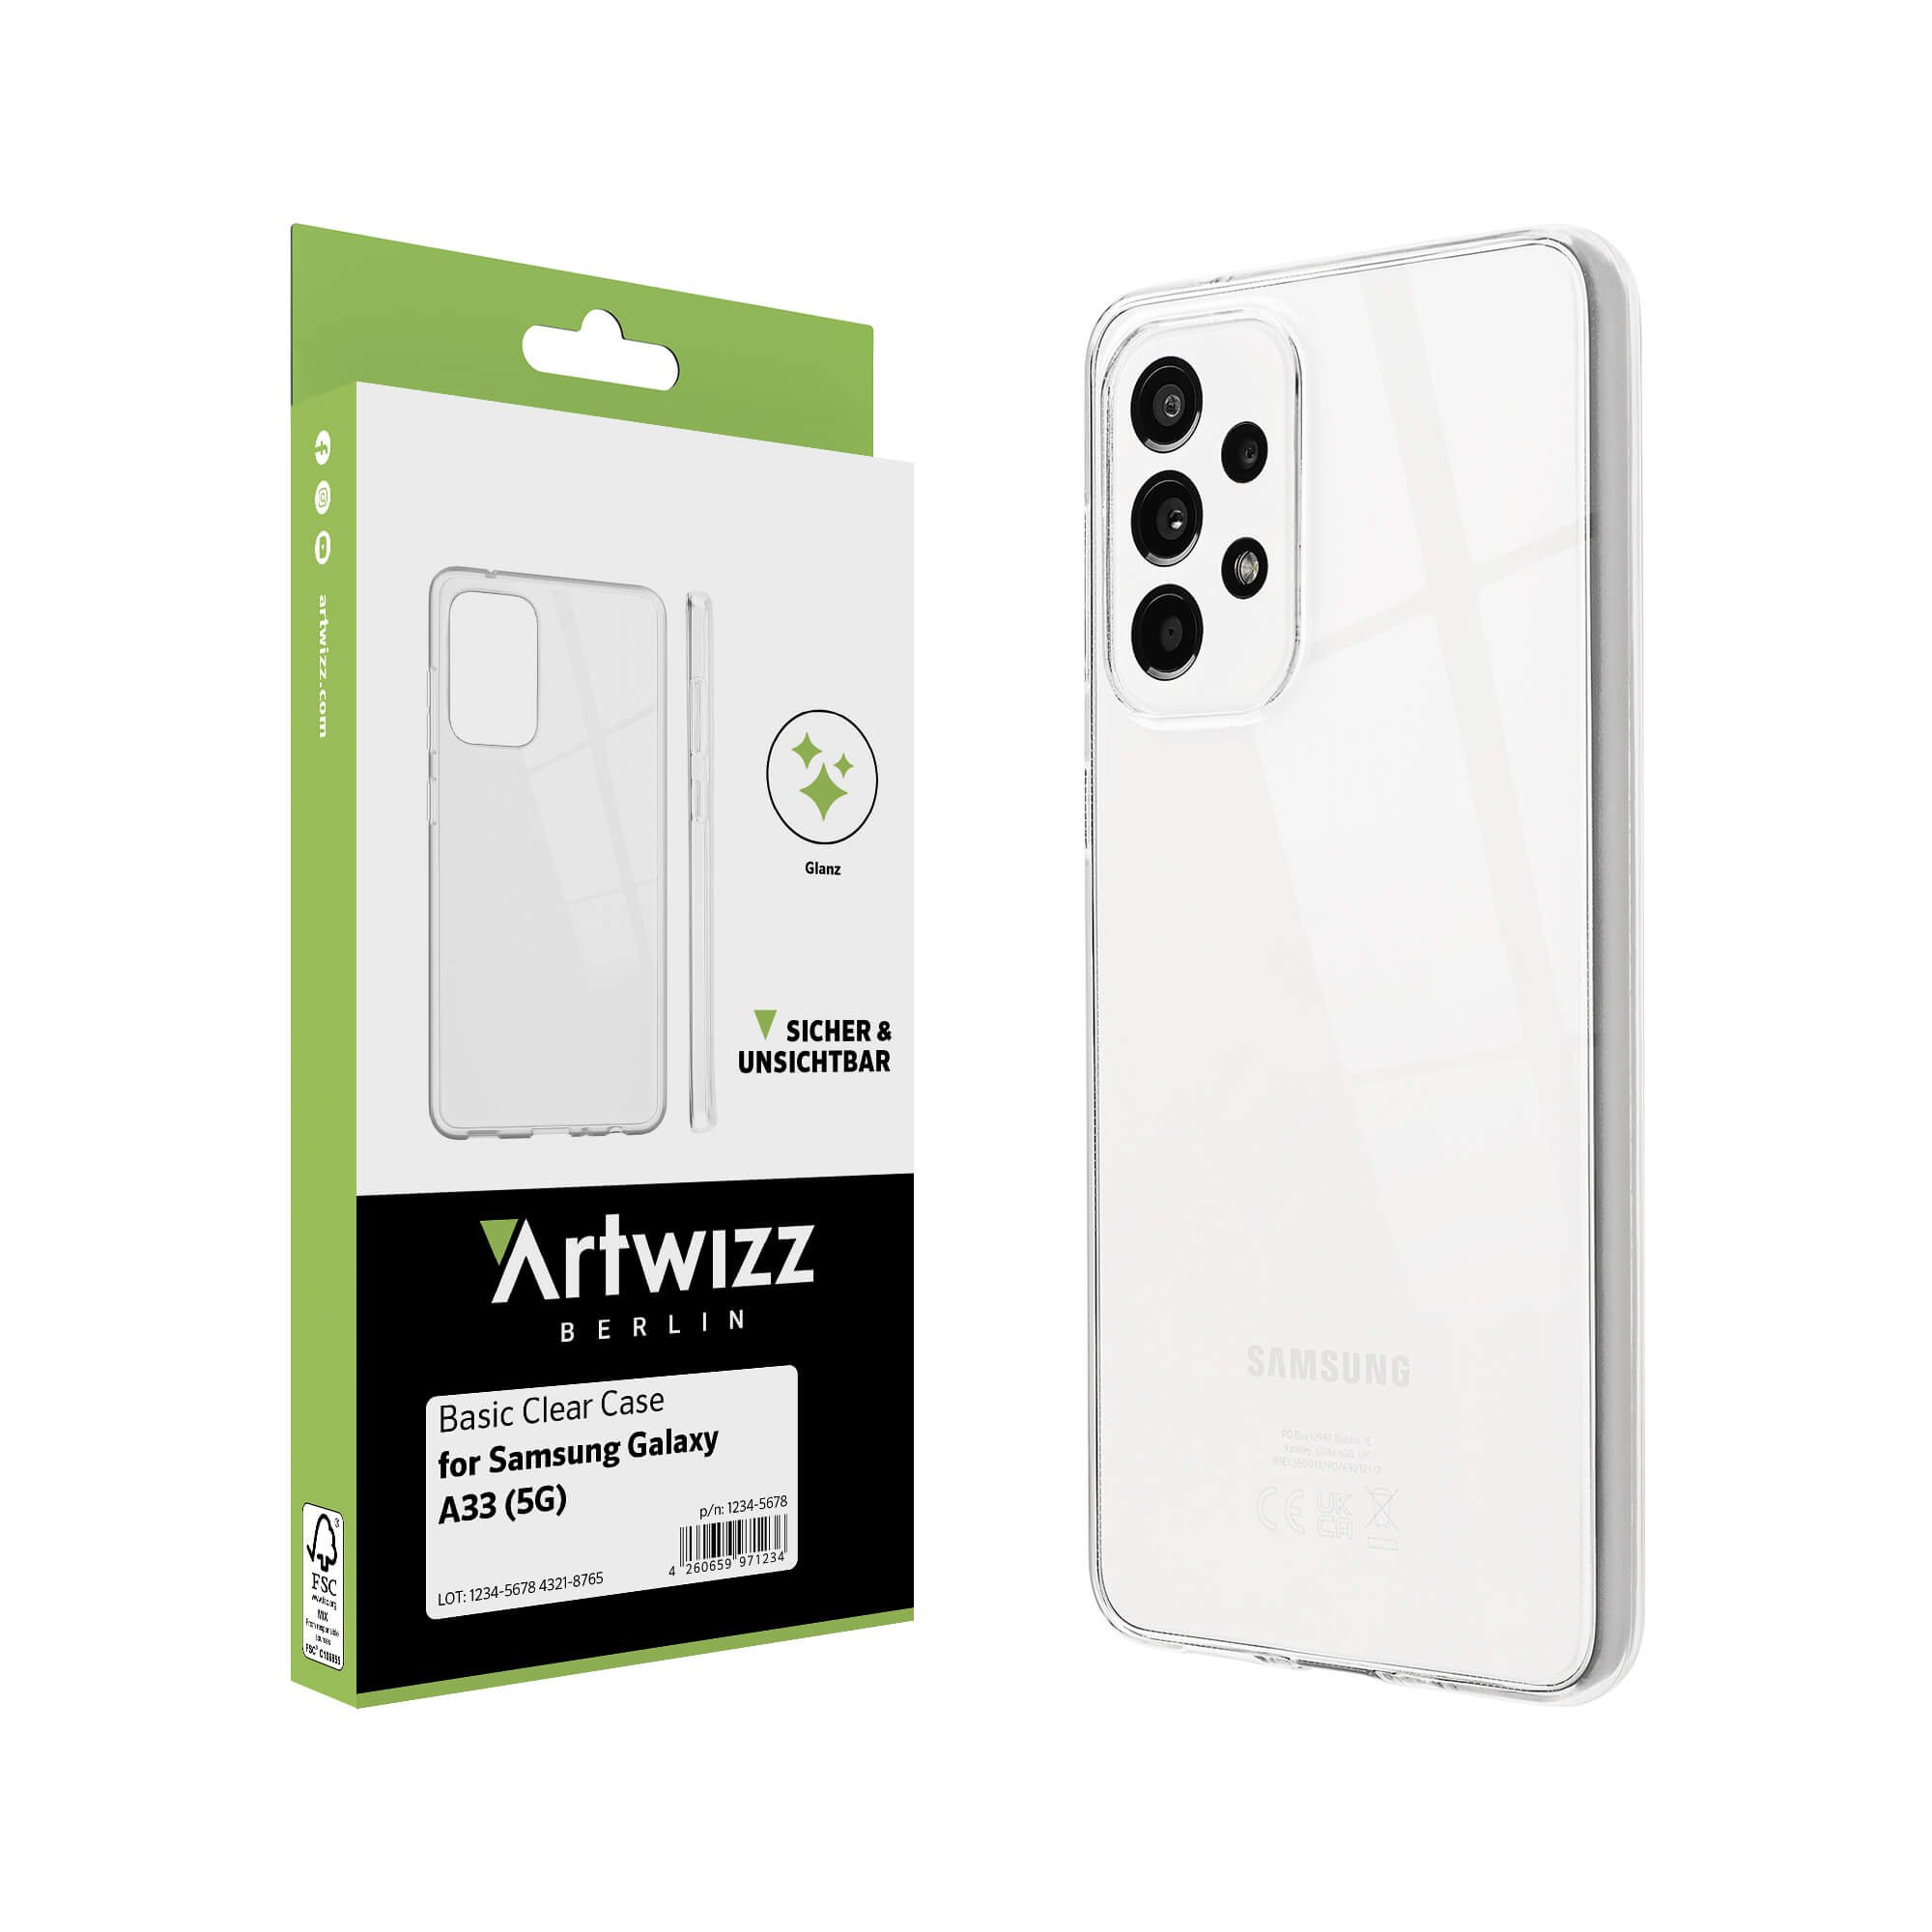 ARTWIZZ Basic Clear Case, A33 Samsung, (5G), Transparent Backcover, Galaxy